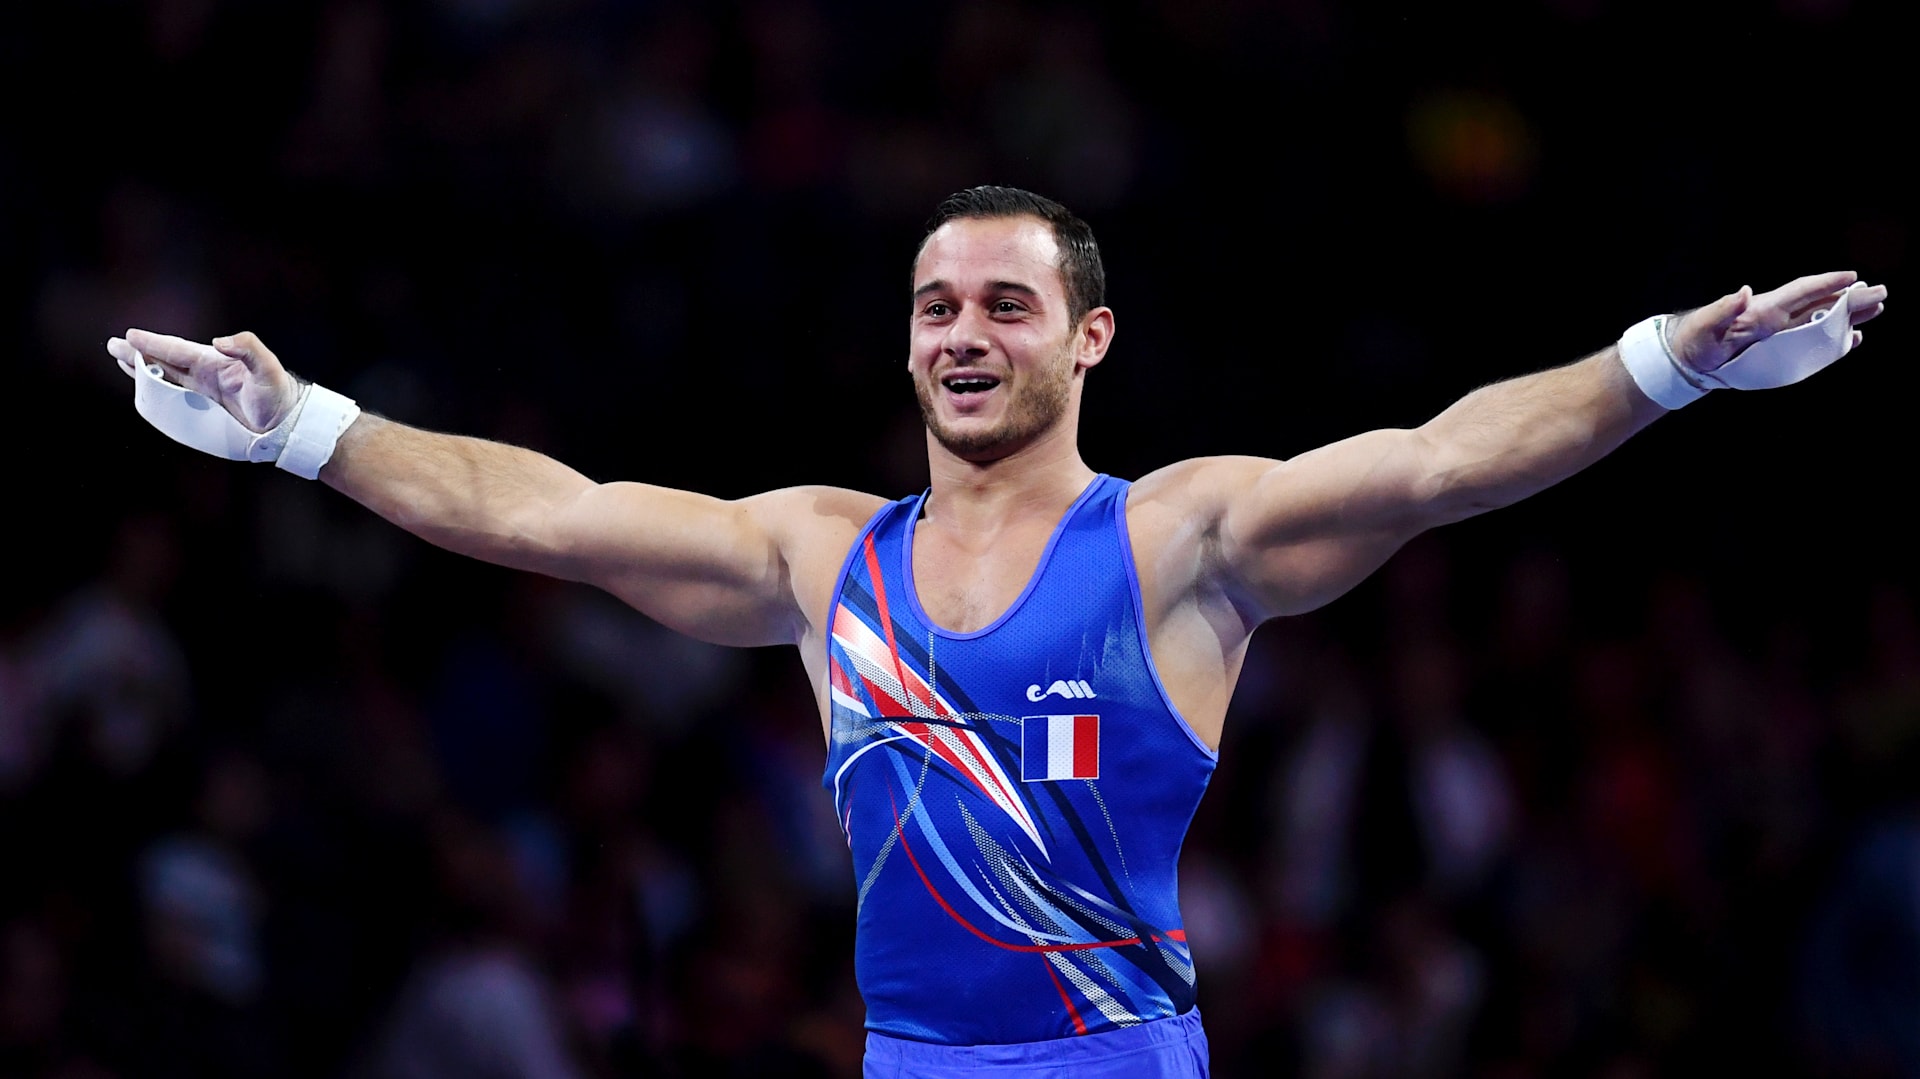 French gymnast Samir Ait Said looks ahead to 2020 after horrific